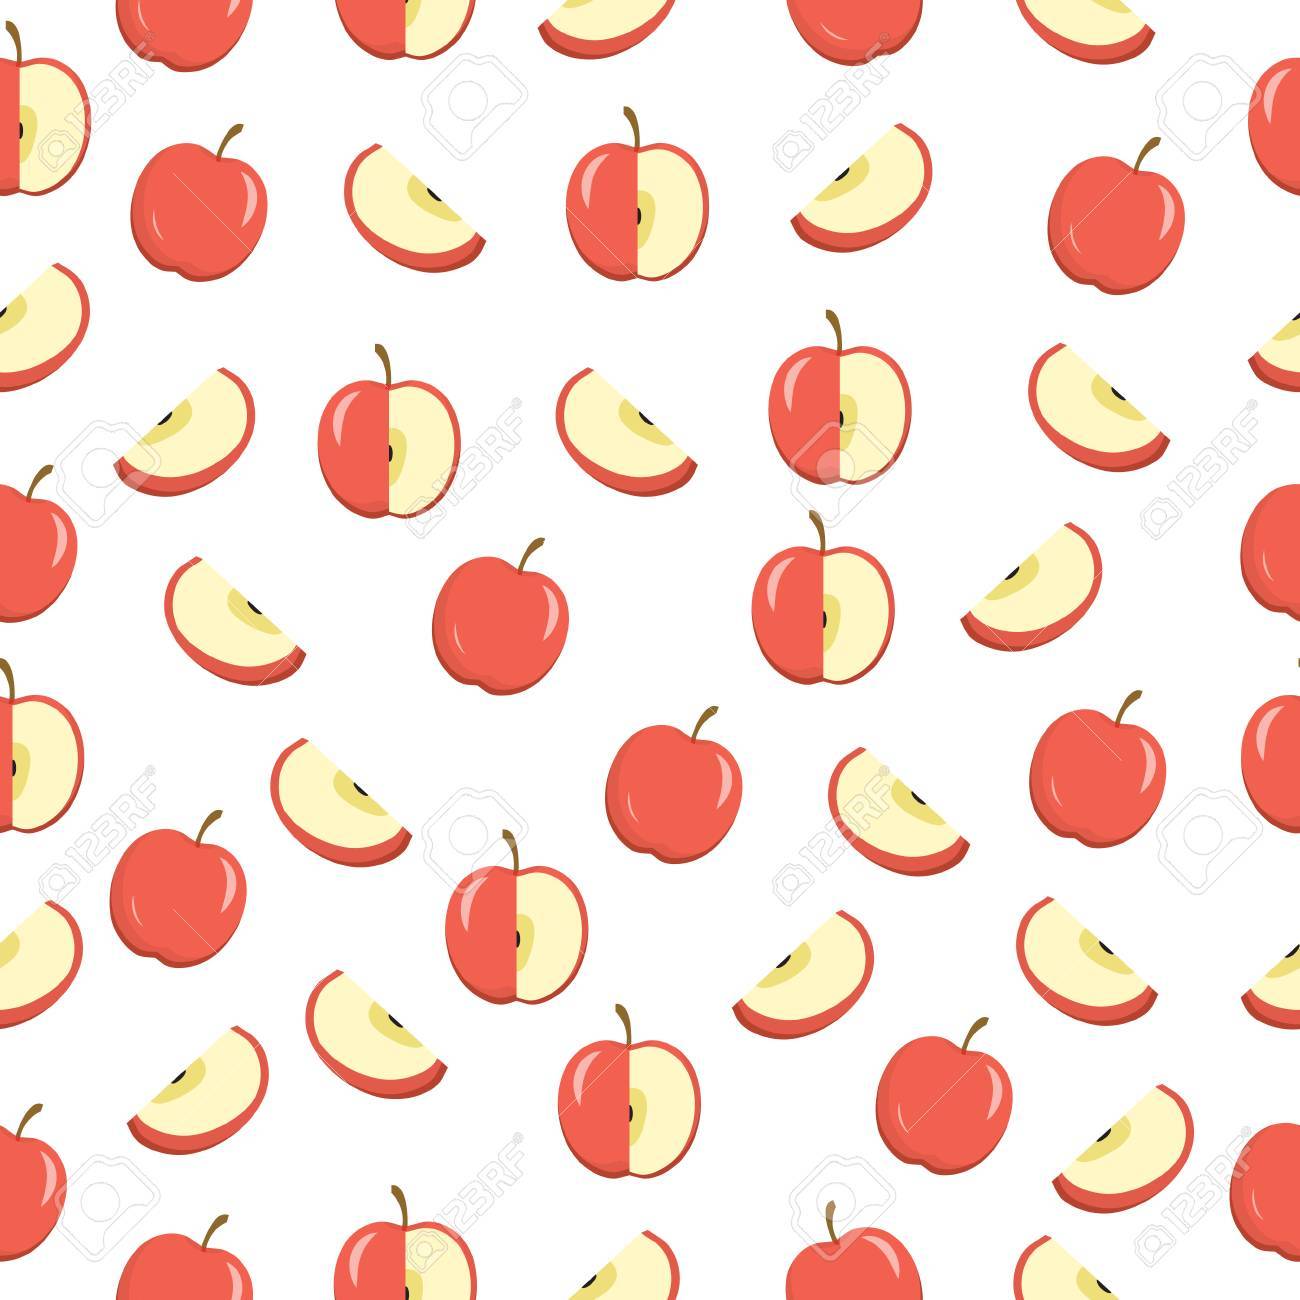 Apples Seamless Texture Background Wallpaper Vector